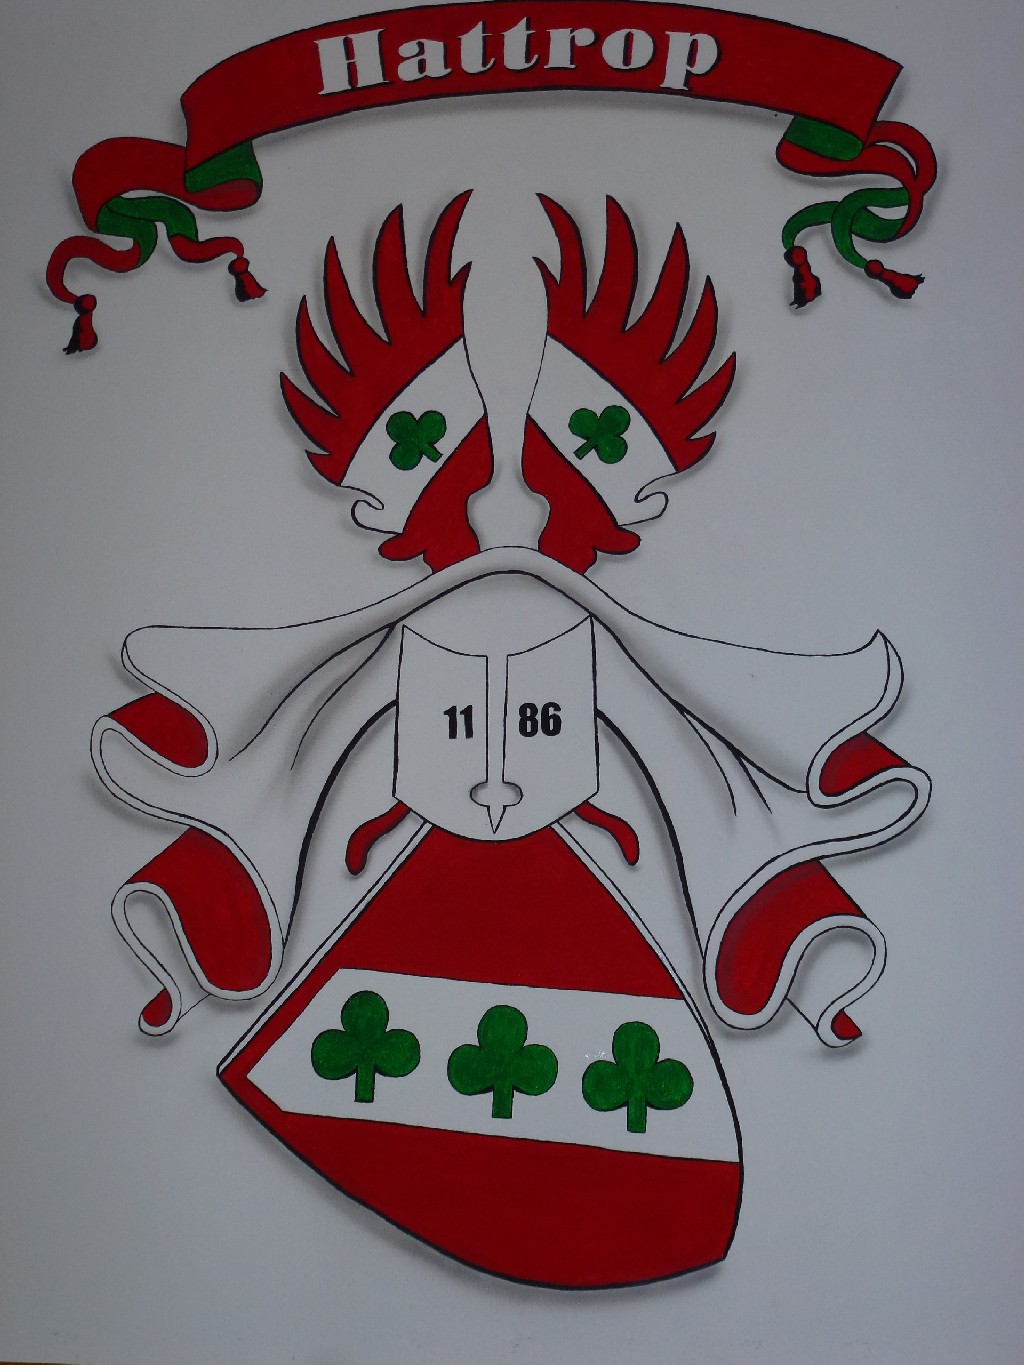 Neues Hattroper Wappen in der Sektbar